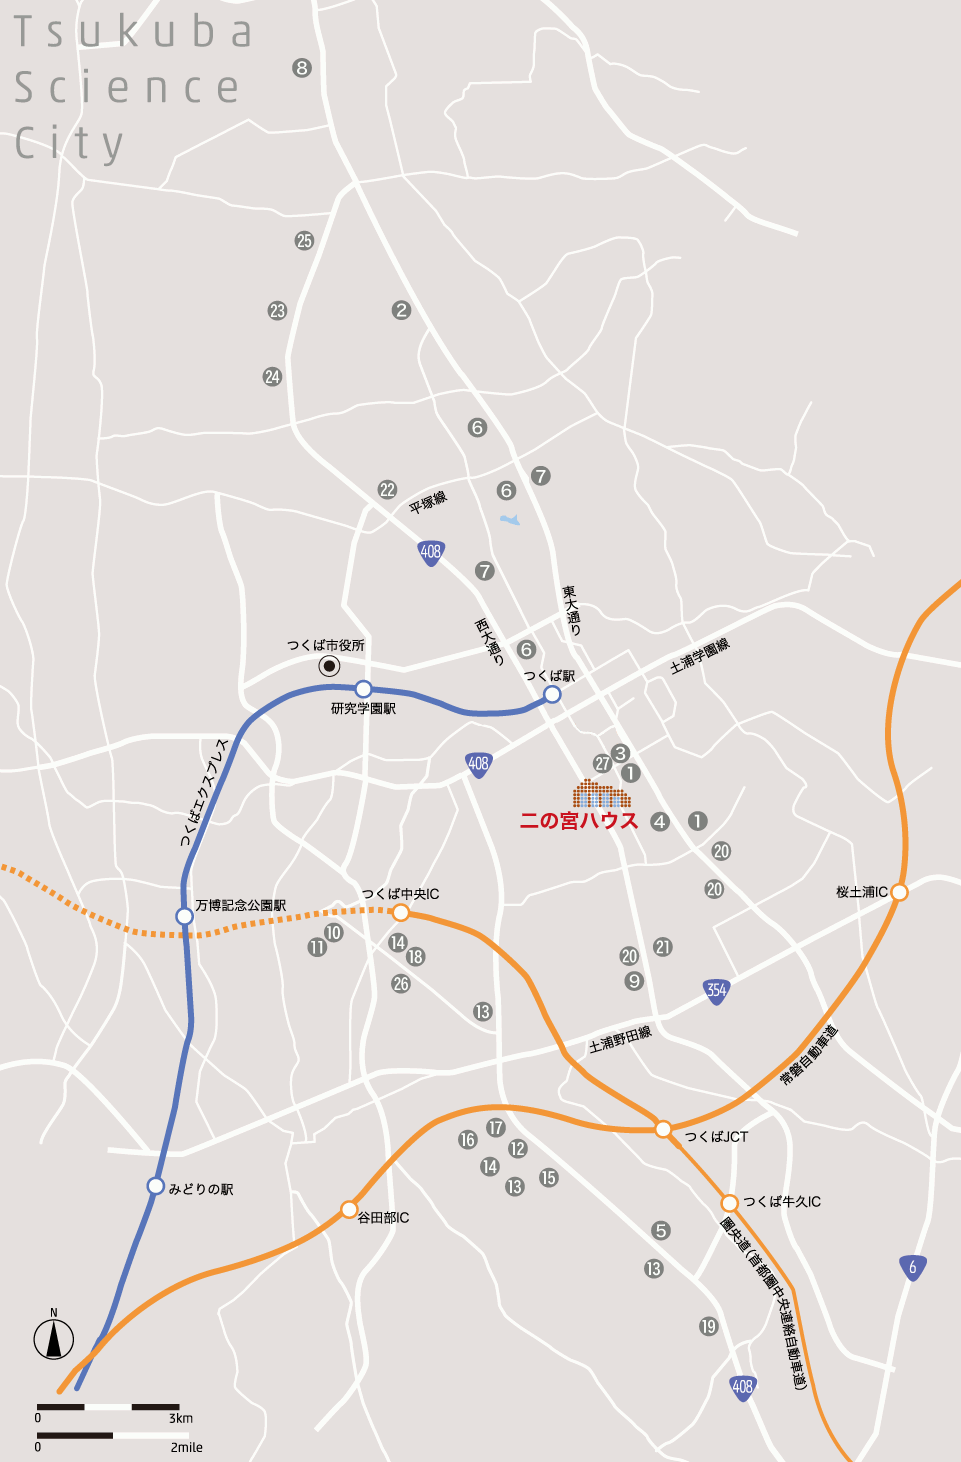 Tsukuba Science City